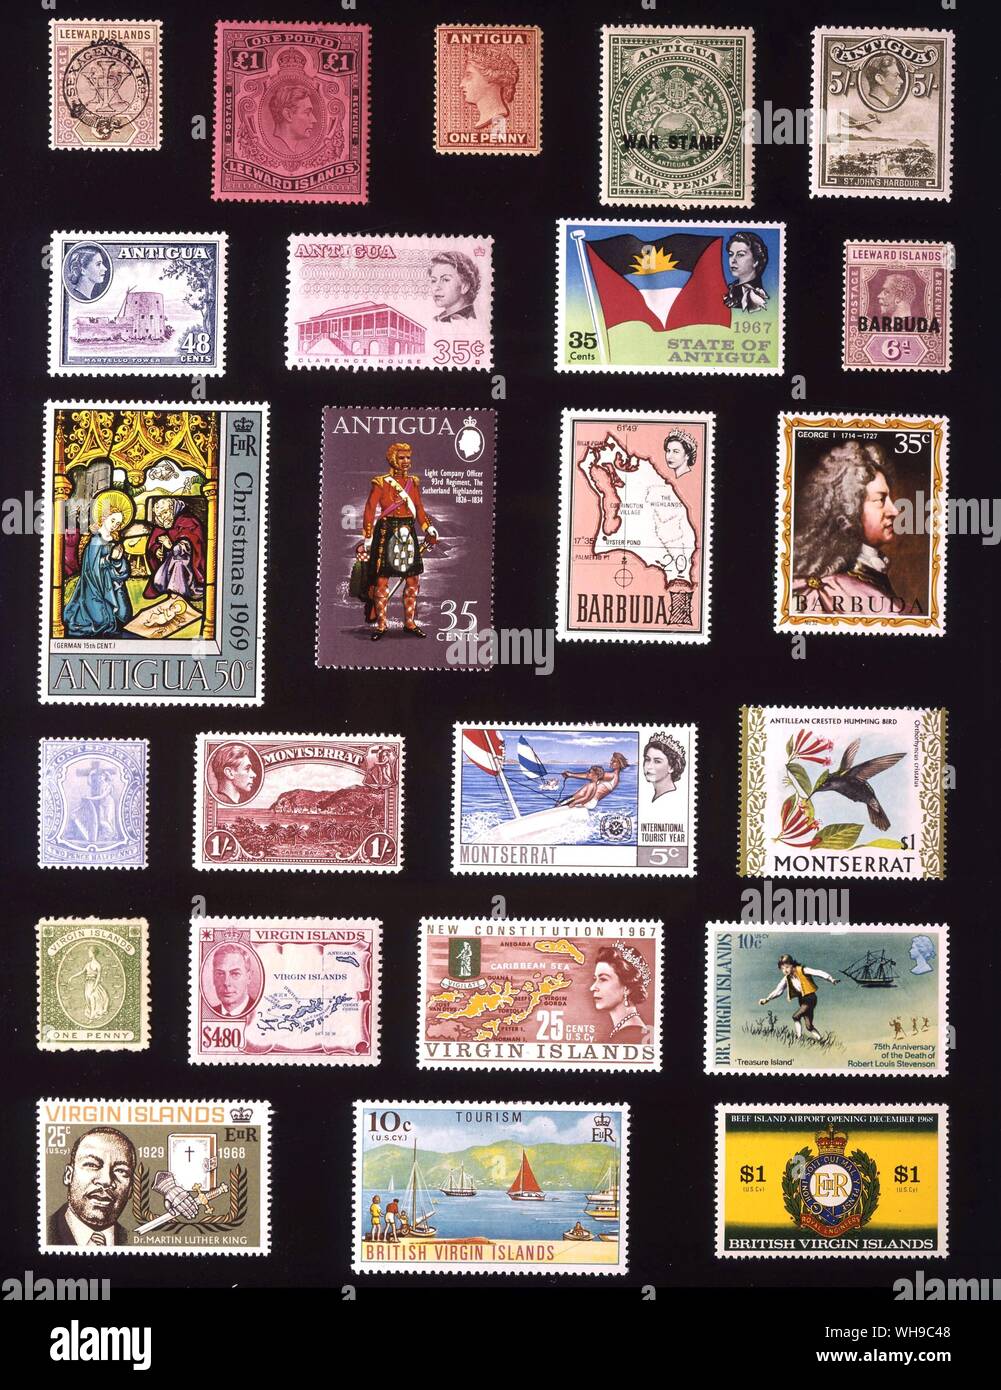 AMERICA - LEEWARD ISLANDS: (left to right) 1. Leeward Islands, 6 pence, 1897, 2. Leeward Islands, 1 pound, 1938, 3. Antigua, 1 penny, 1863, 4. Antigua, halfpenny, 1916, 5. Antigua, 5 shillings, 1938, 6. Antigua, 48 cents, 1953, 7. Antigua, 35 cents, 1966, 8. Antigua, 35 cents, 1967, 9. Barbuda, 6 pence, 1922, 10. Antigua, 50 cents, 1969, 11. Antigua, 35 cents, 1970, 12. Barbuda, 20 cents, 1970, 13. Barbuda, 35 cents, 1971, 14. Montserrat, 2.5 pence, 1908, 15. Montserrat, 1 shilling, 1938, 16. Montserrat, 5 cents, 1967, 17. Montserrat, 1 dollar, 1970, 18. Virgin Islands, 1 penny, 1866, 19. Stock Photo